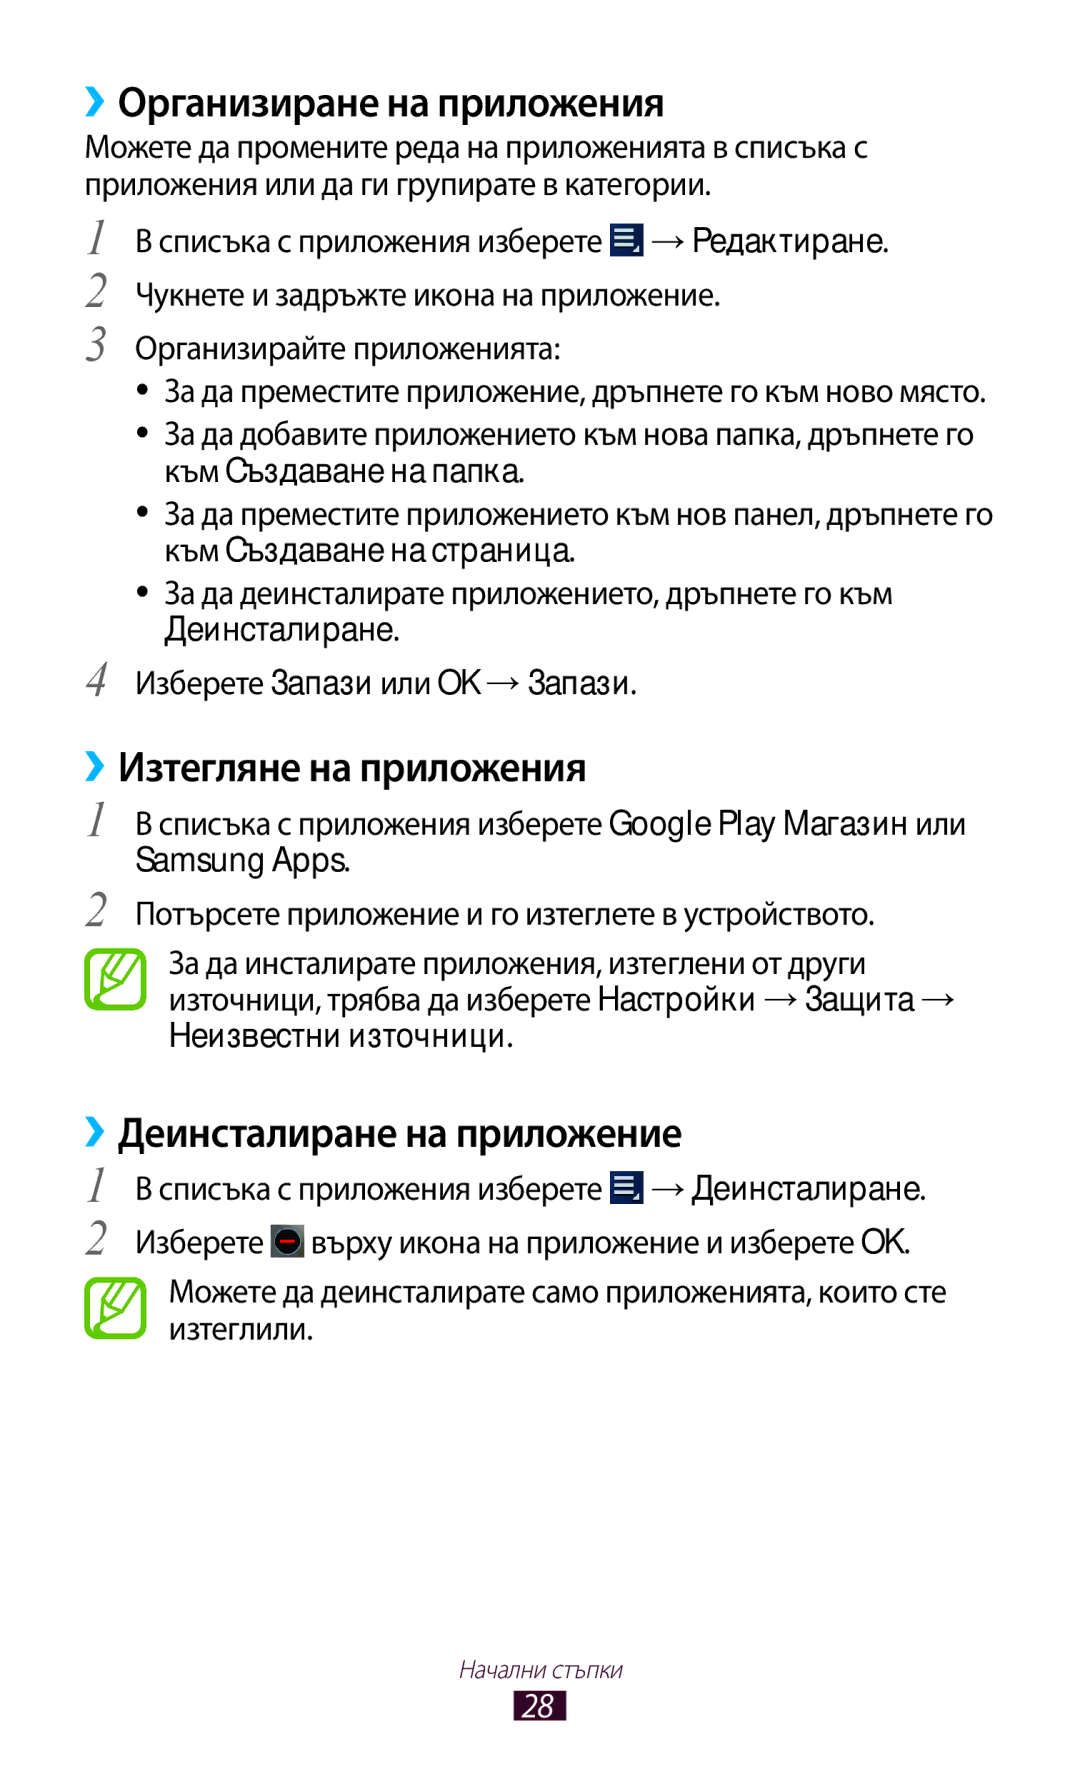 Samsung GT-P3110TSACOA manual ››Организиране на приложения, ››Изтегляне на приложения, ››Деинсталиране на приложение 